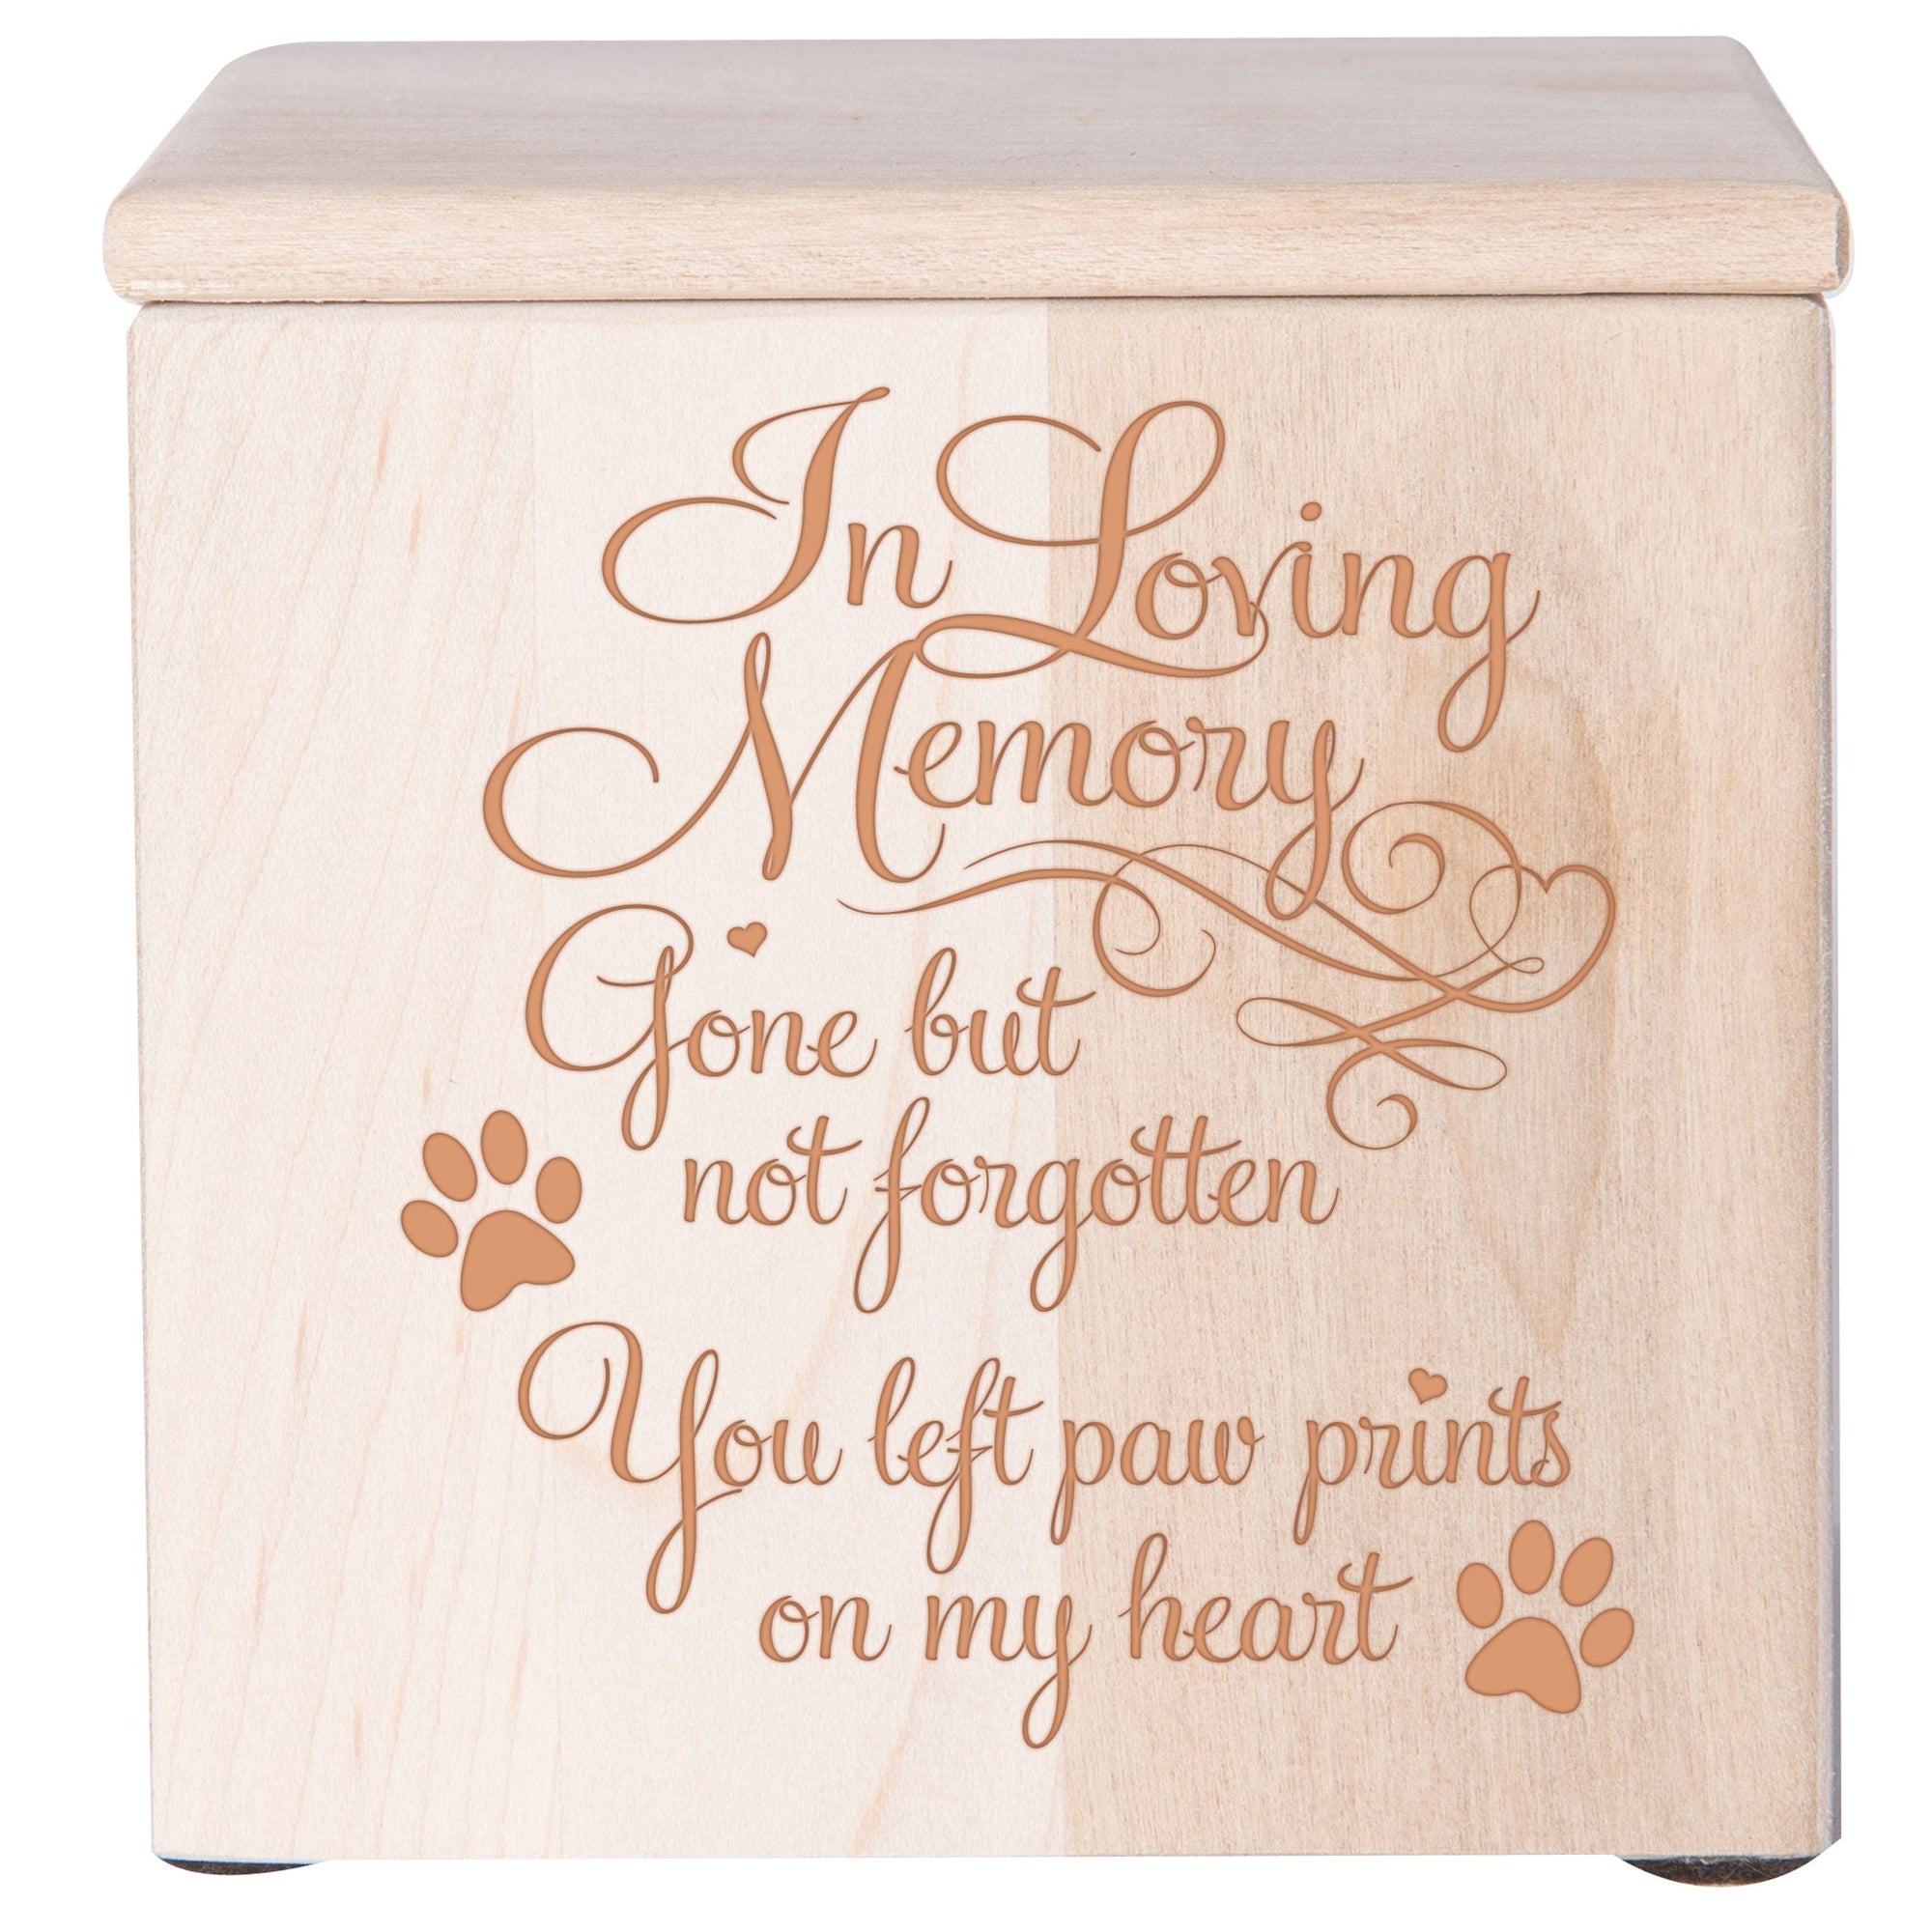 Maple Pet Memorial 3.5x3.5 Keepsake Urn with phrase "Gone But Not Forgotten"